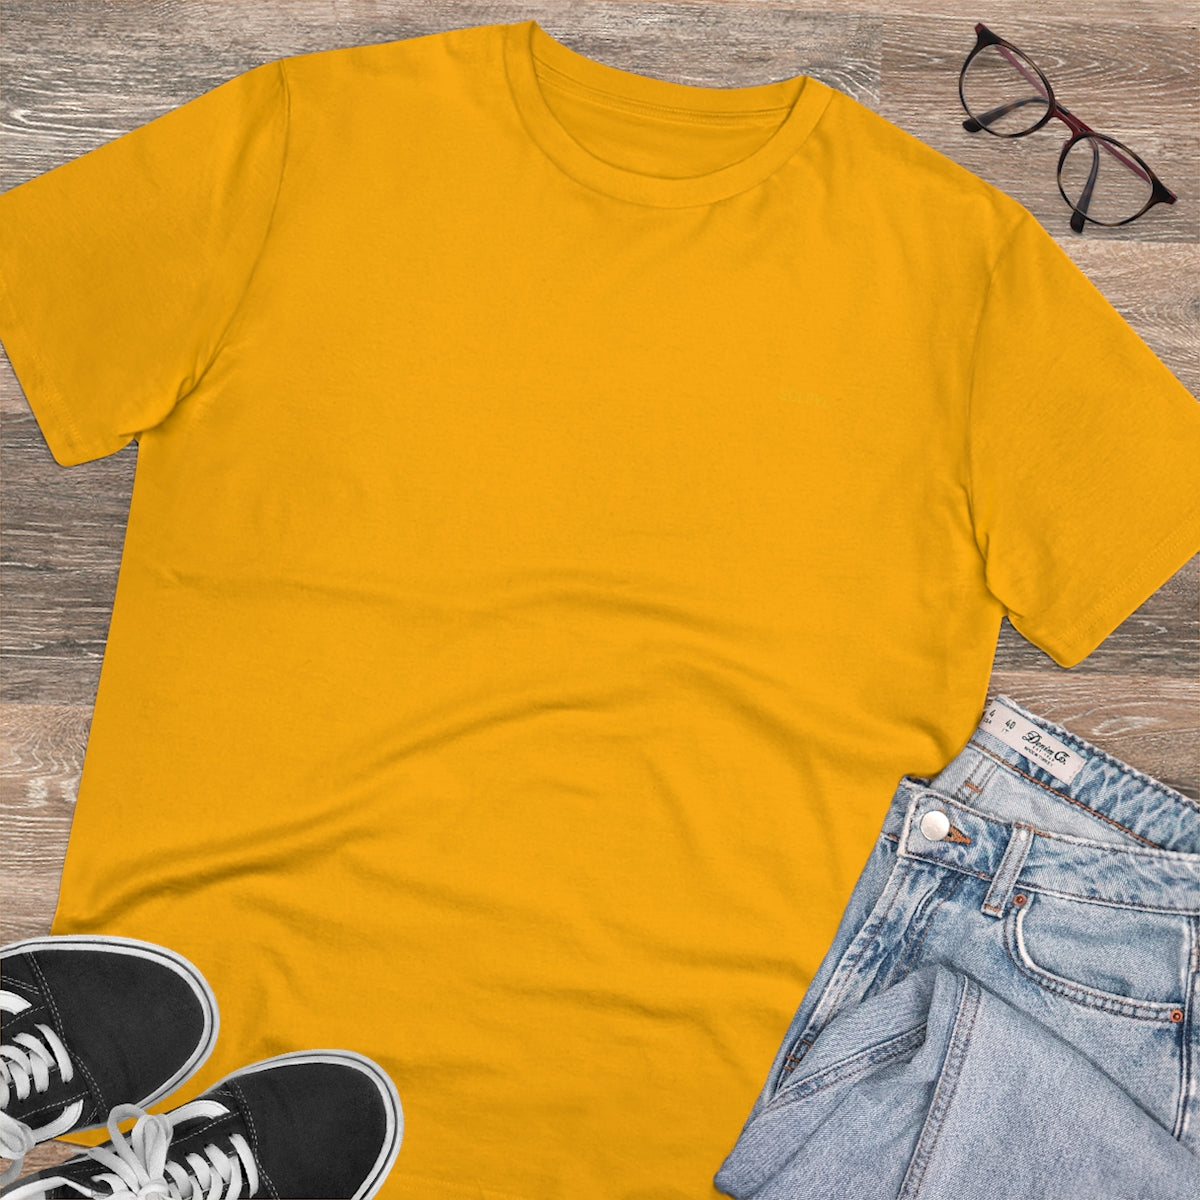 Orange Plain - Organic T-shirt - Unisex